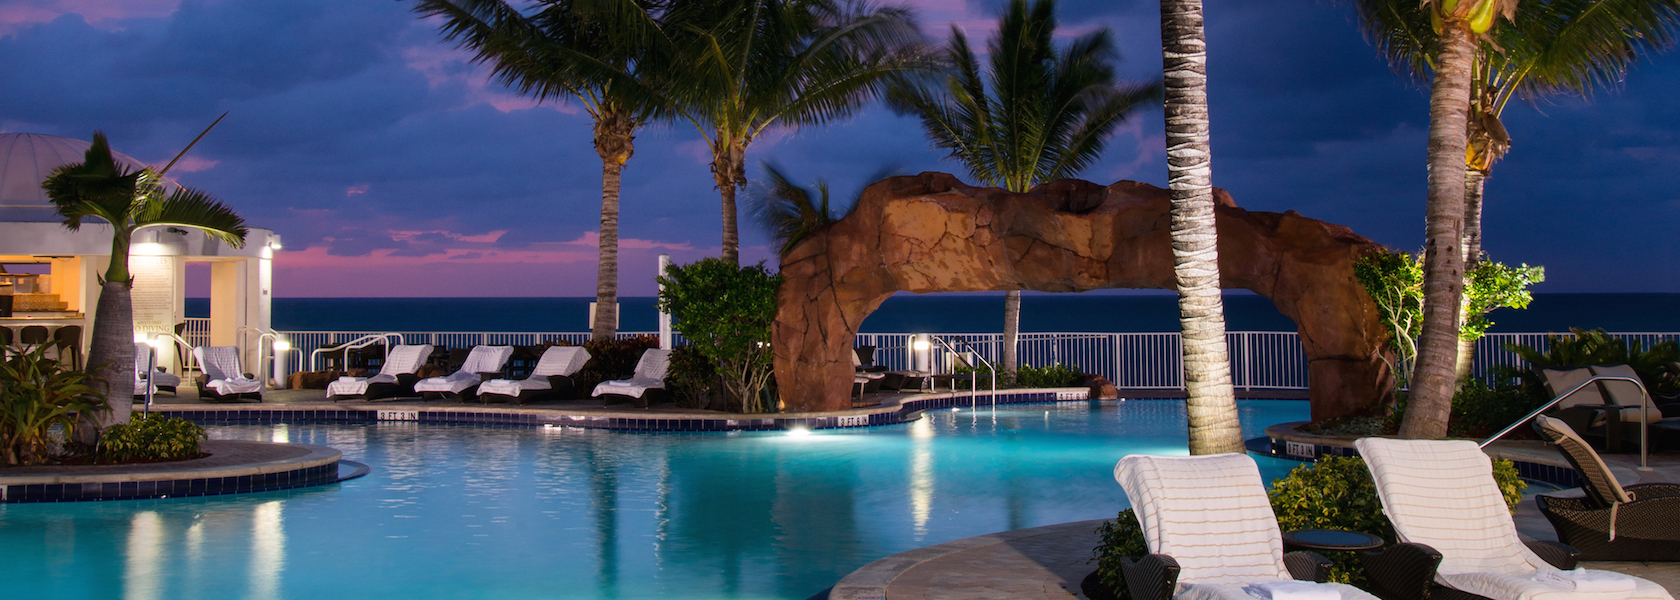 Pool at sunrise at the Trump International Beach Resort